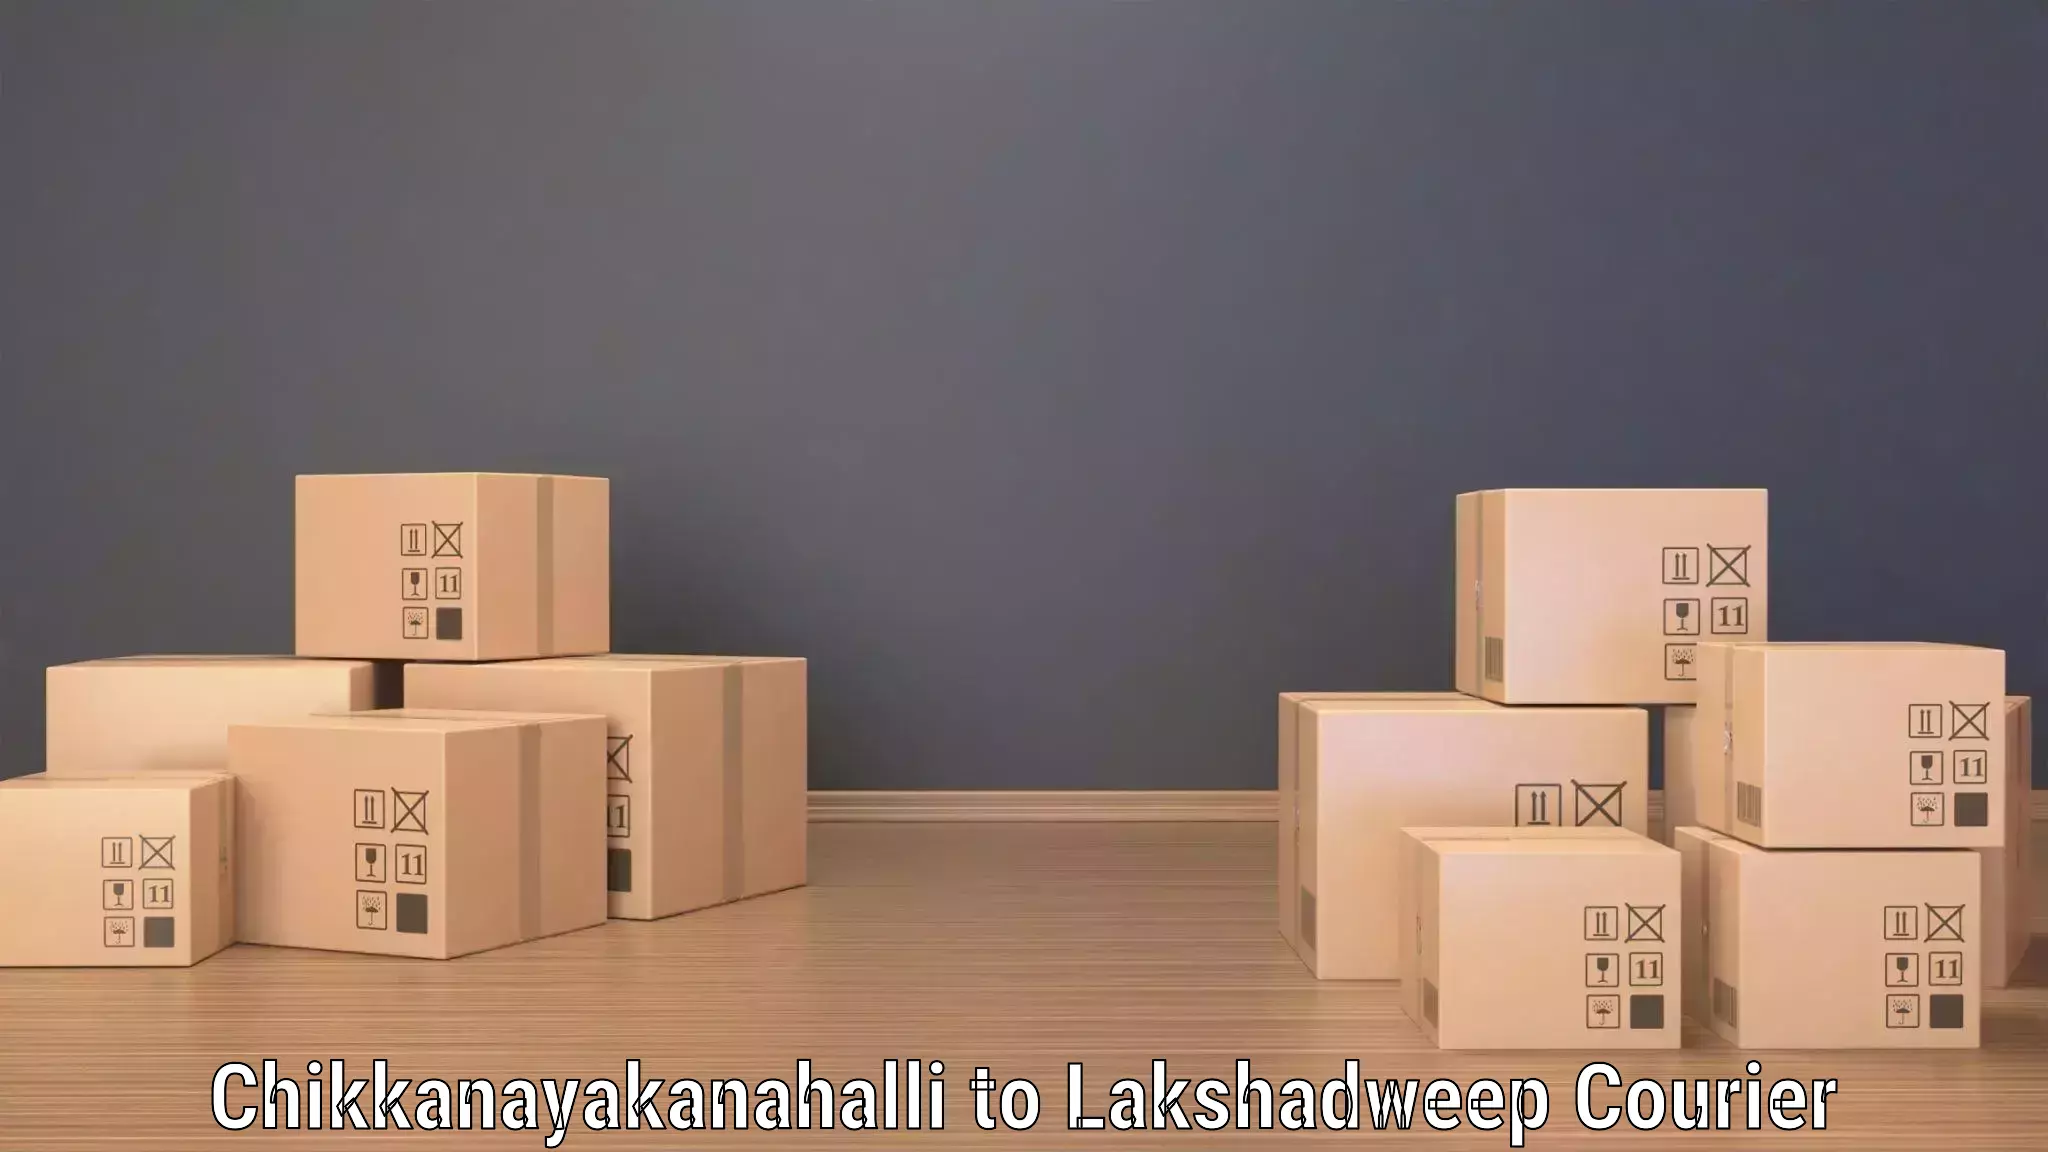 Flexible delivery schedules Chikkanayakanahalli to Lakshadweep